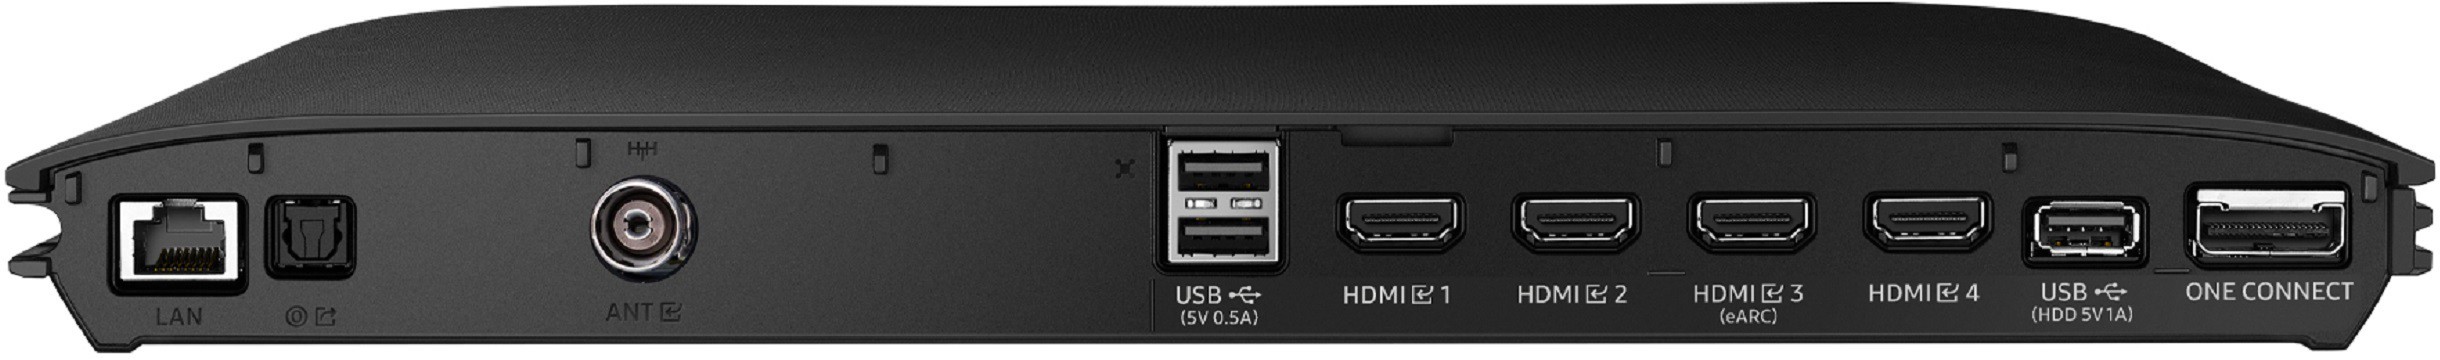 SAMSUNG  QN800BK (65 inch) Ultra HD (8K) (QA65QN800BKXXL)